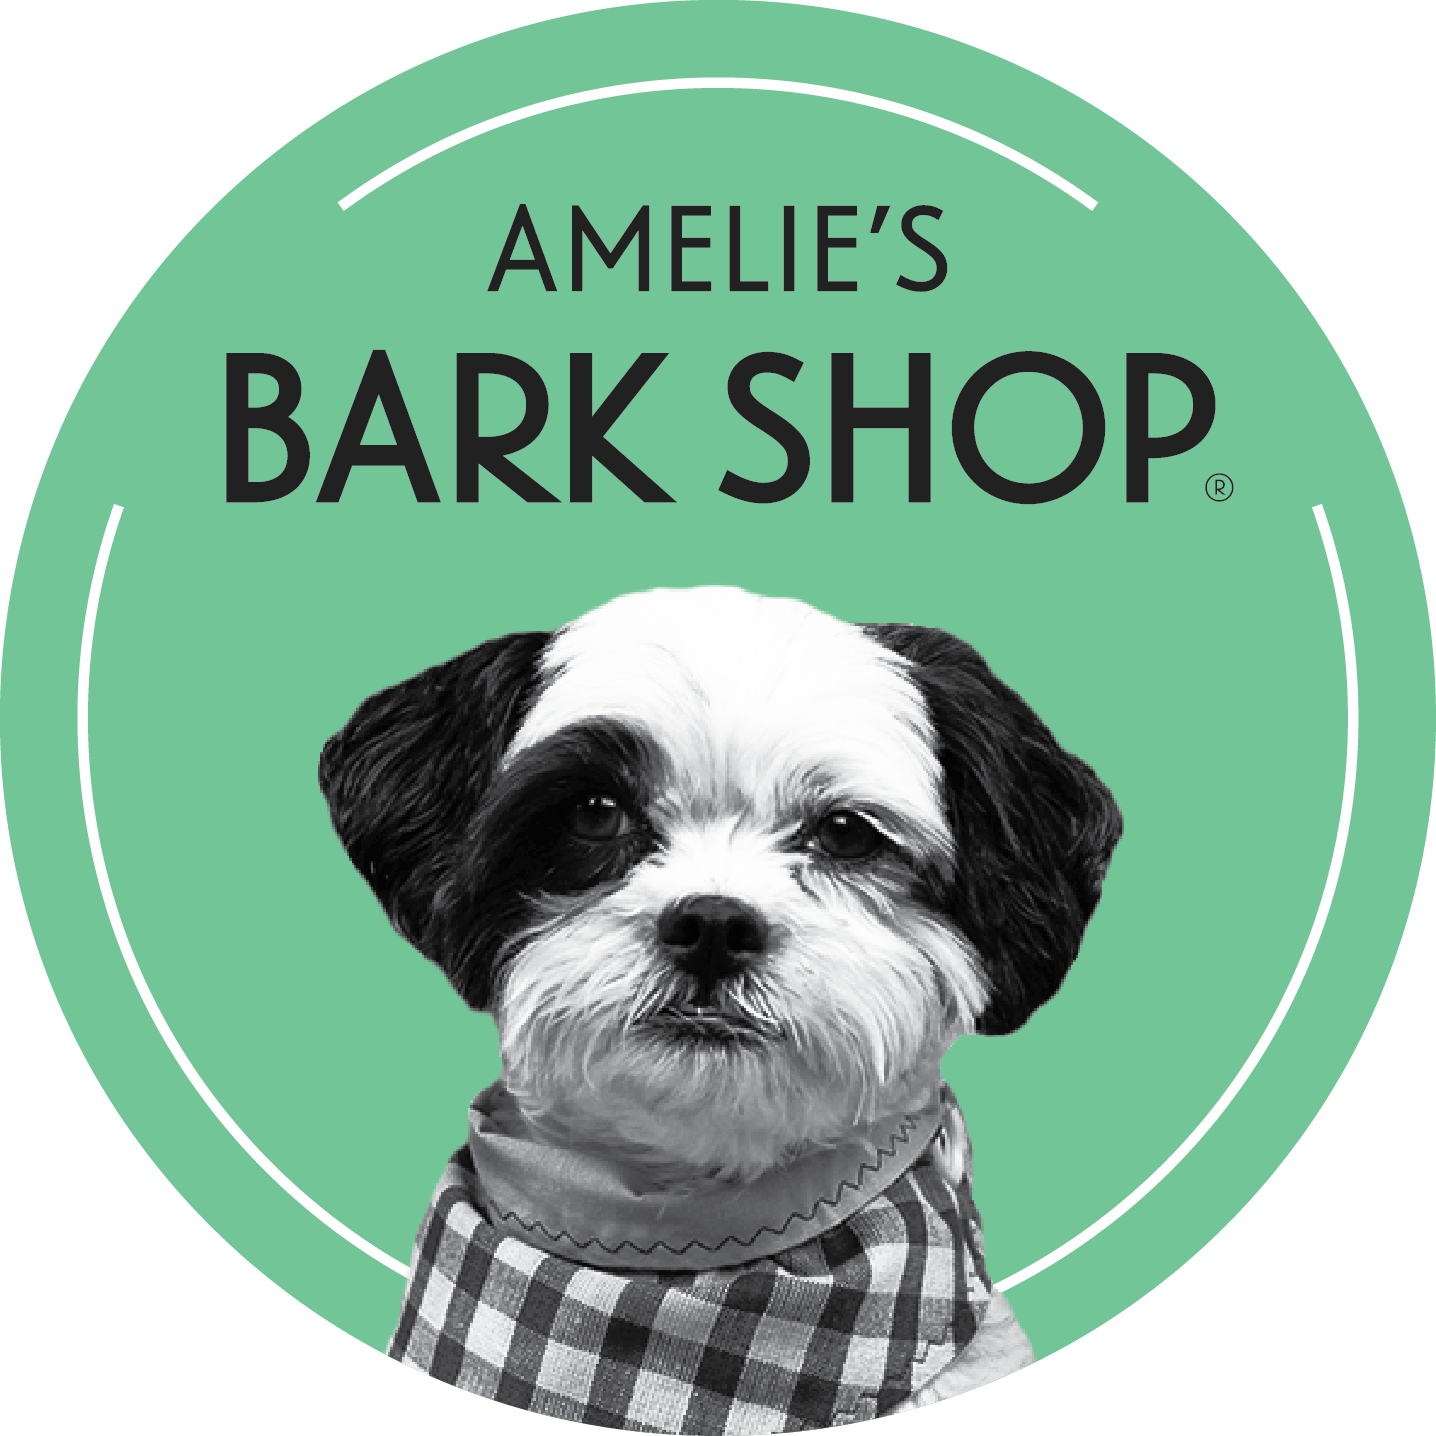 Amelie's Bark Shop